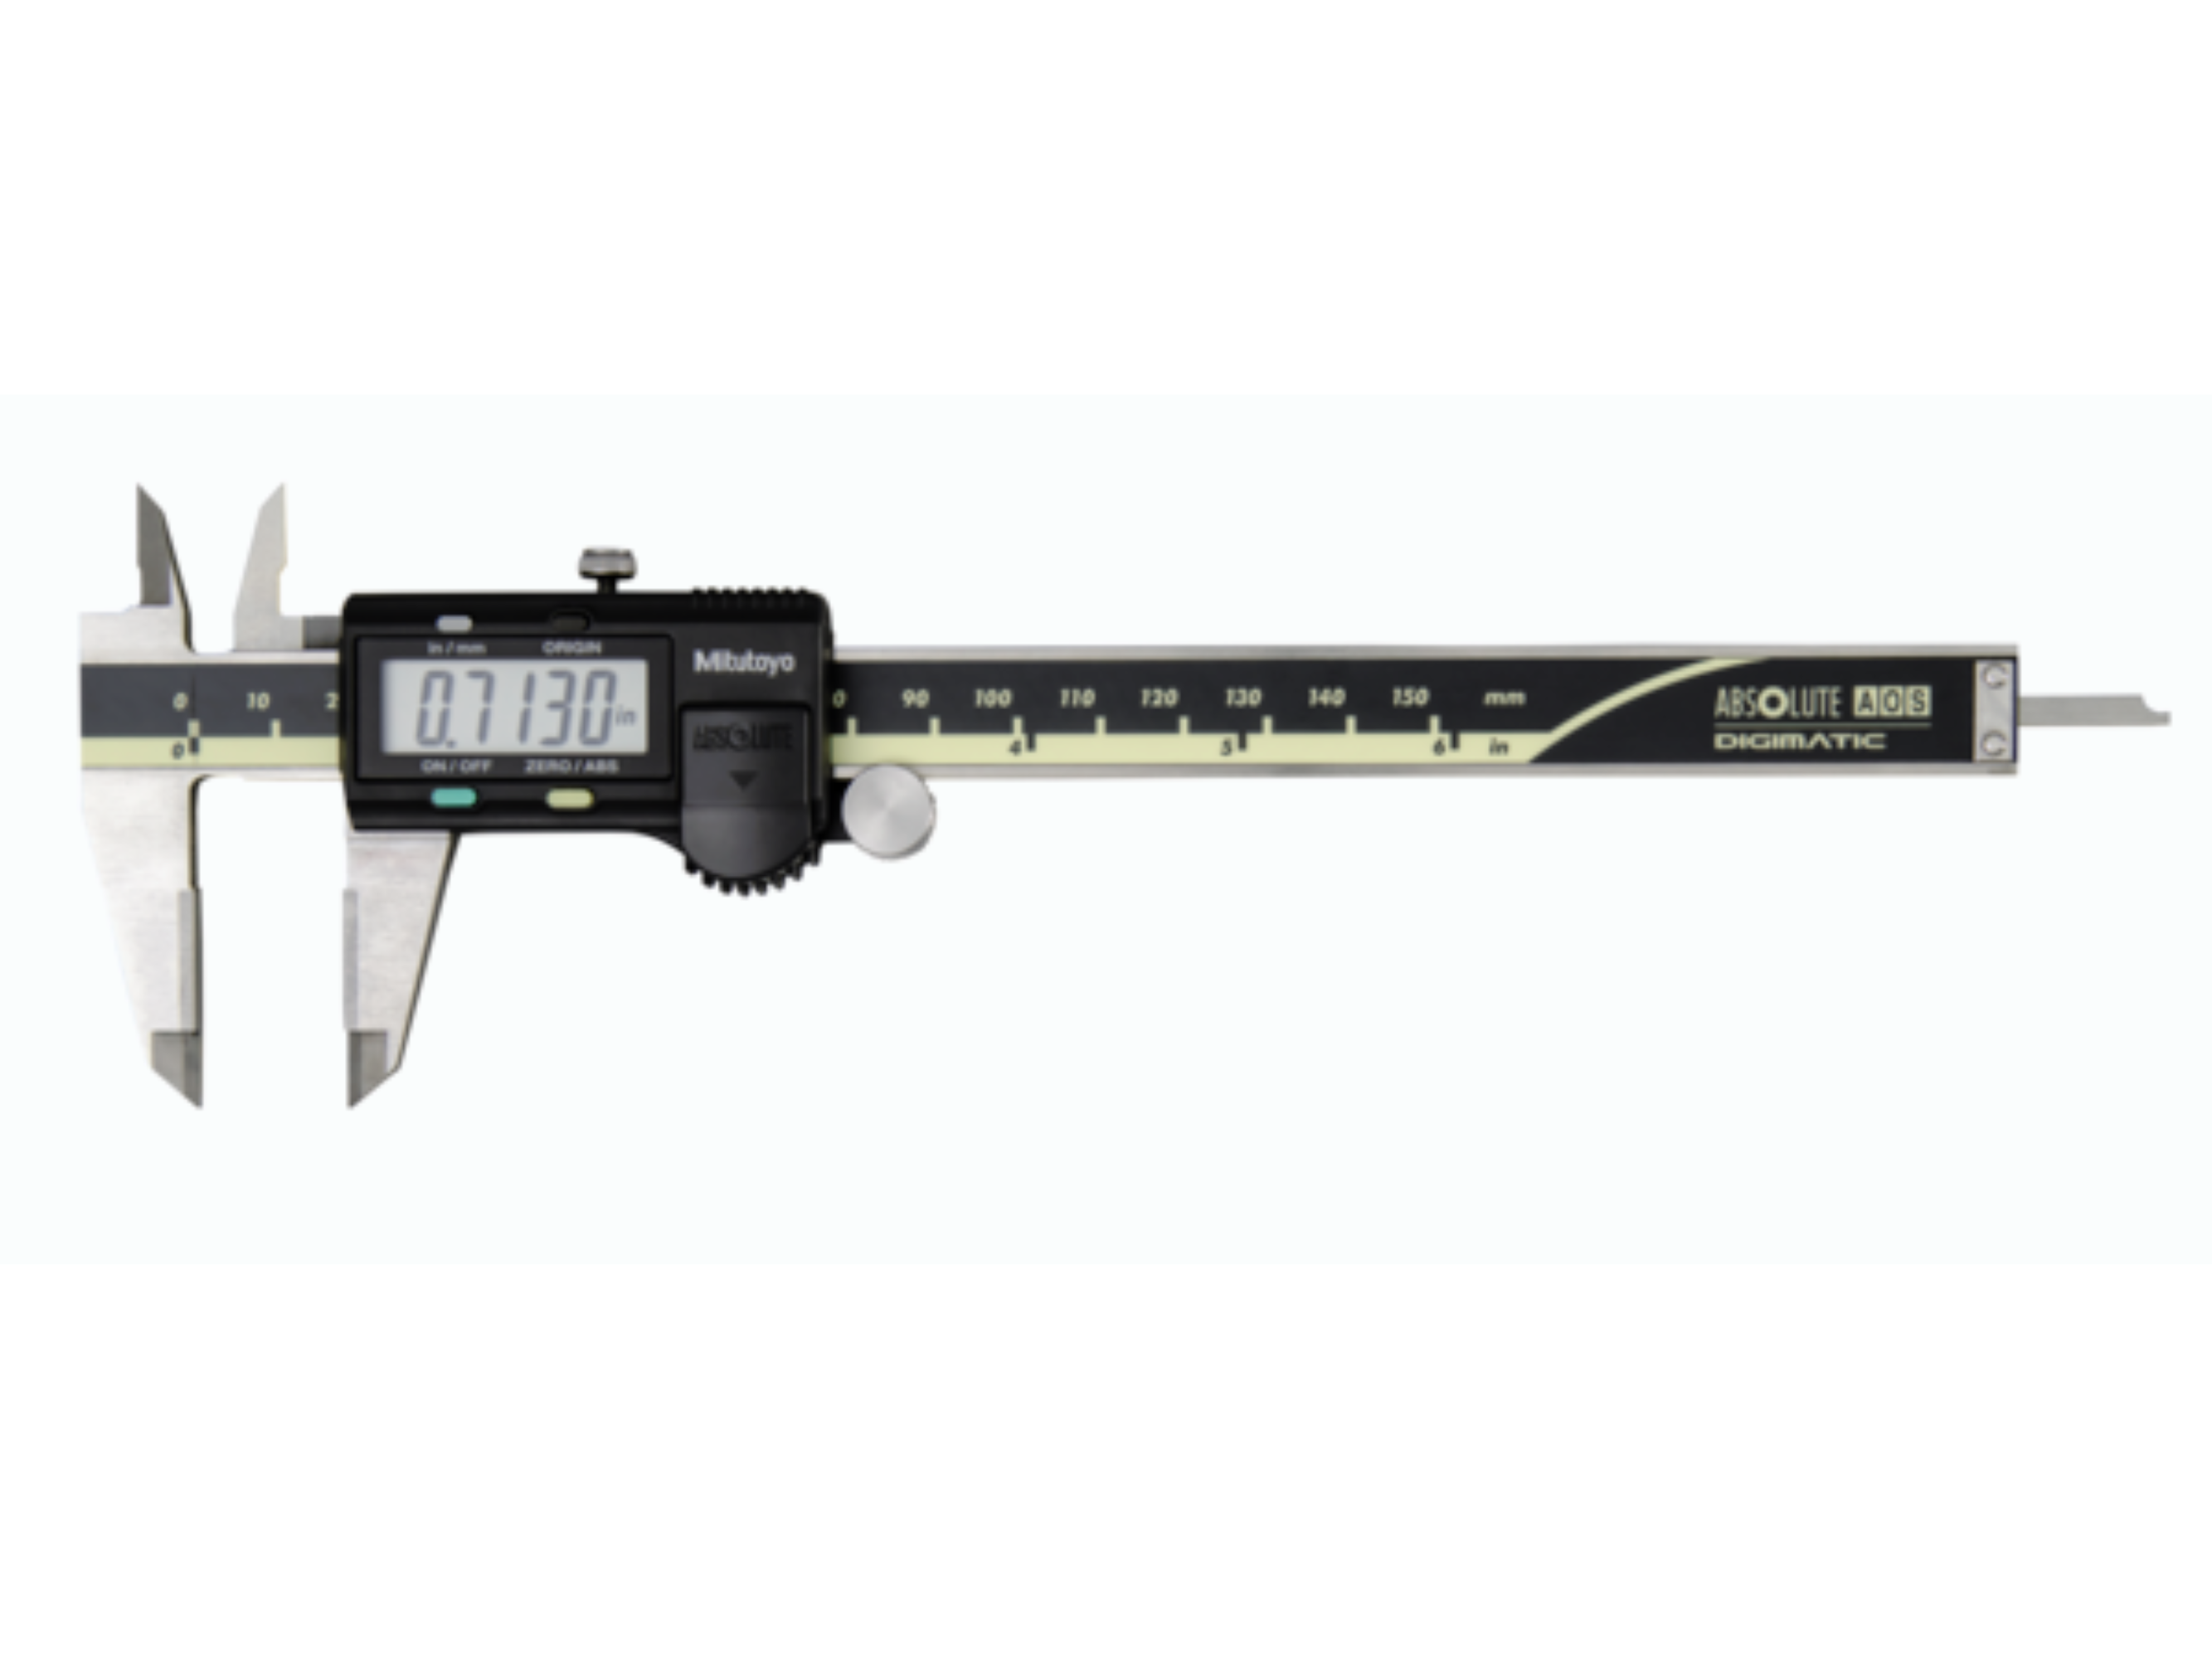 ABSOLUTE AOS Caliper 0-200mm Square depth Rod & Thumb Roller 500-176-30